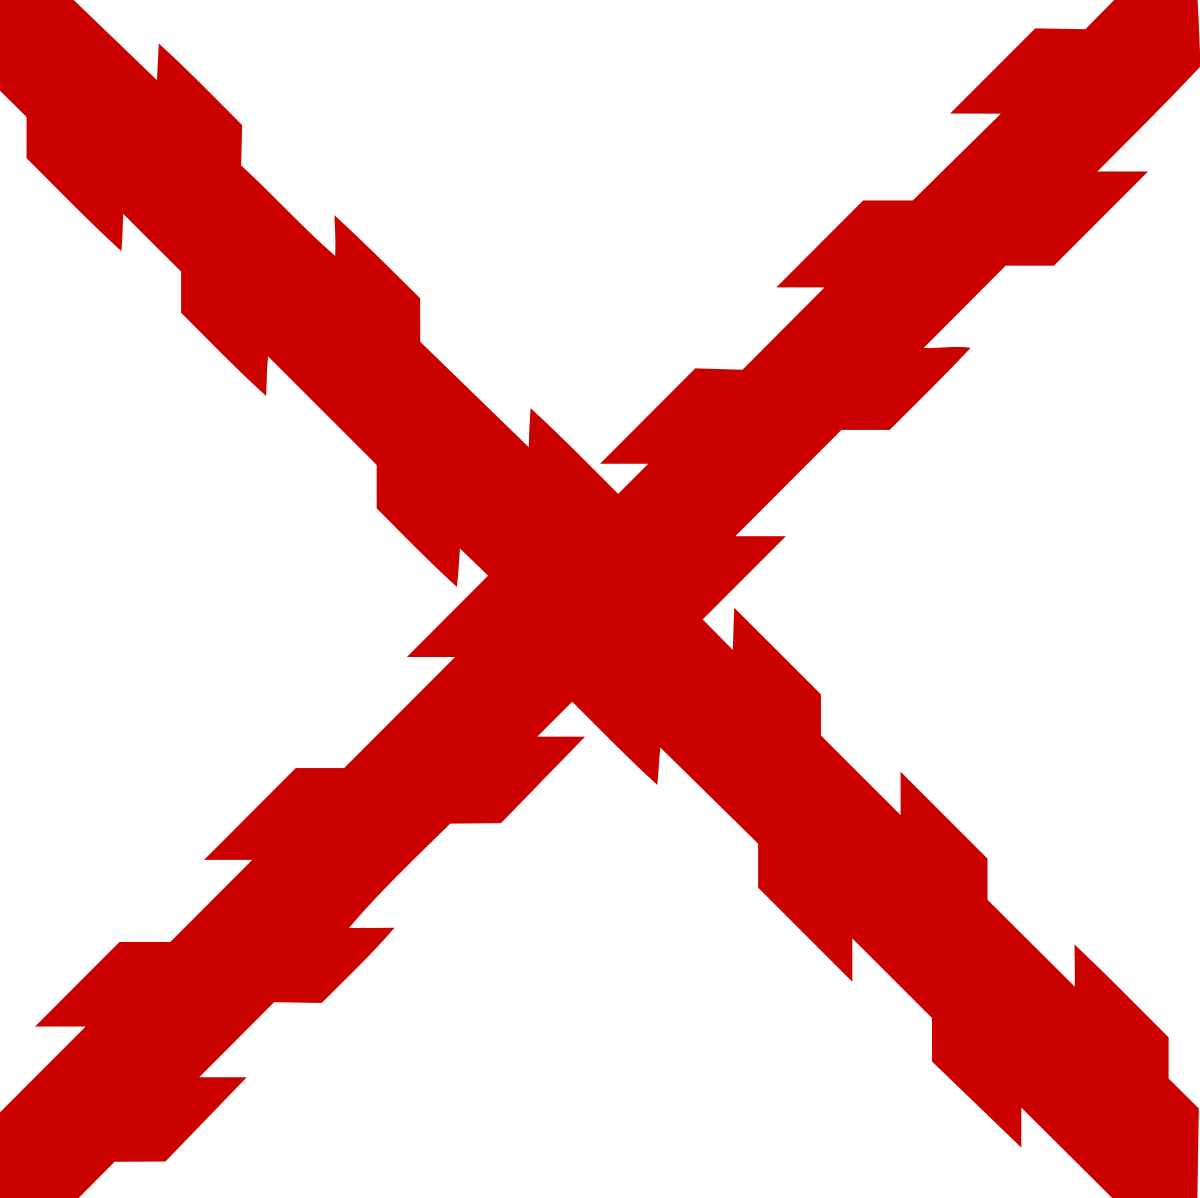 Cross of Burgundy - Wikipedia